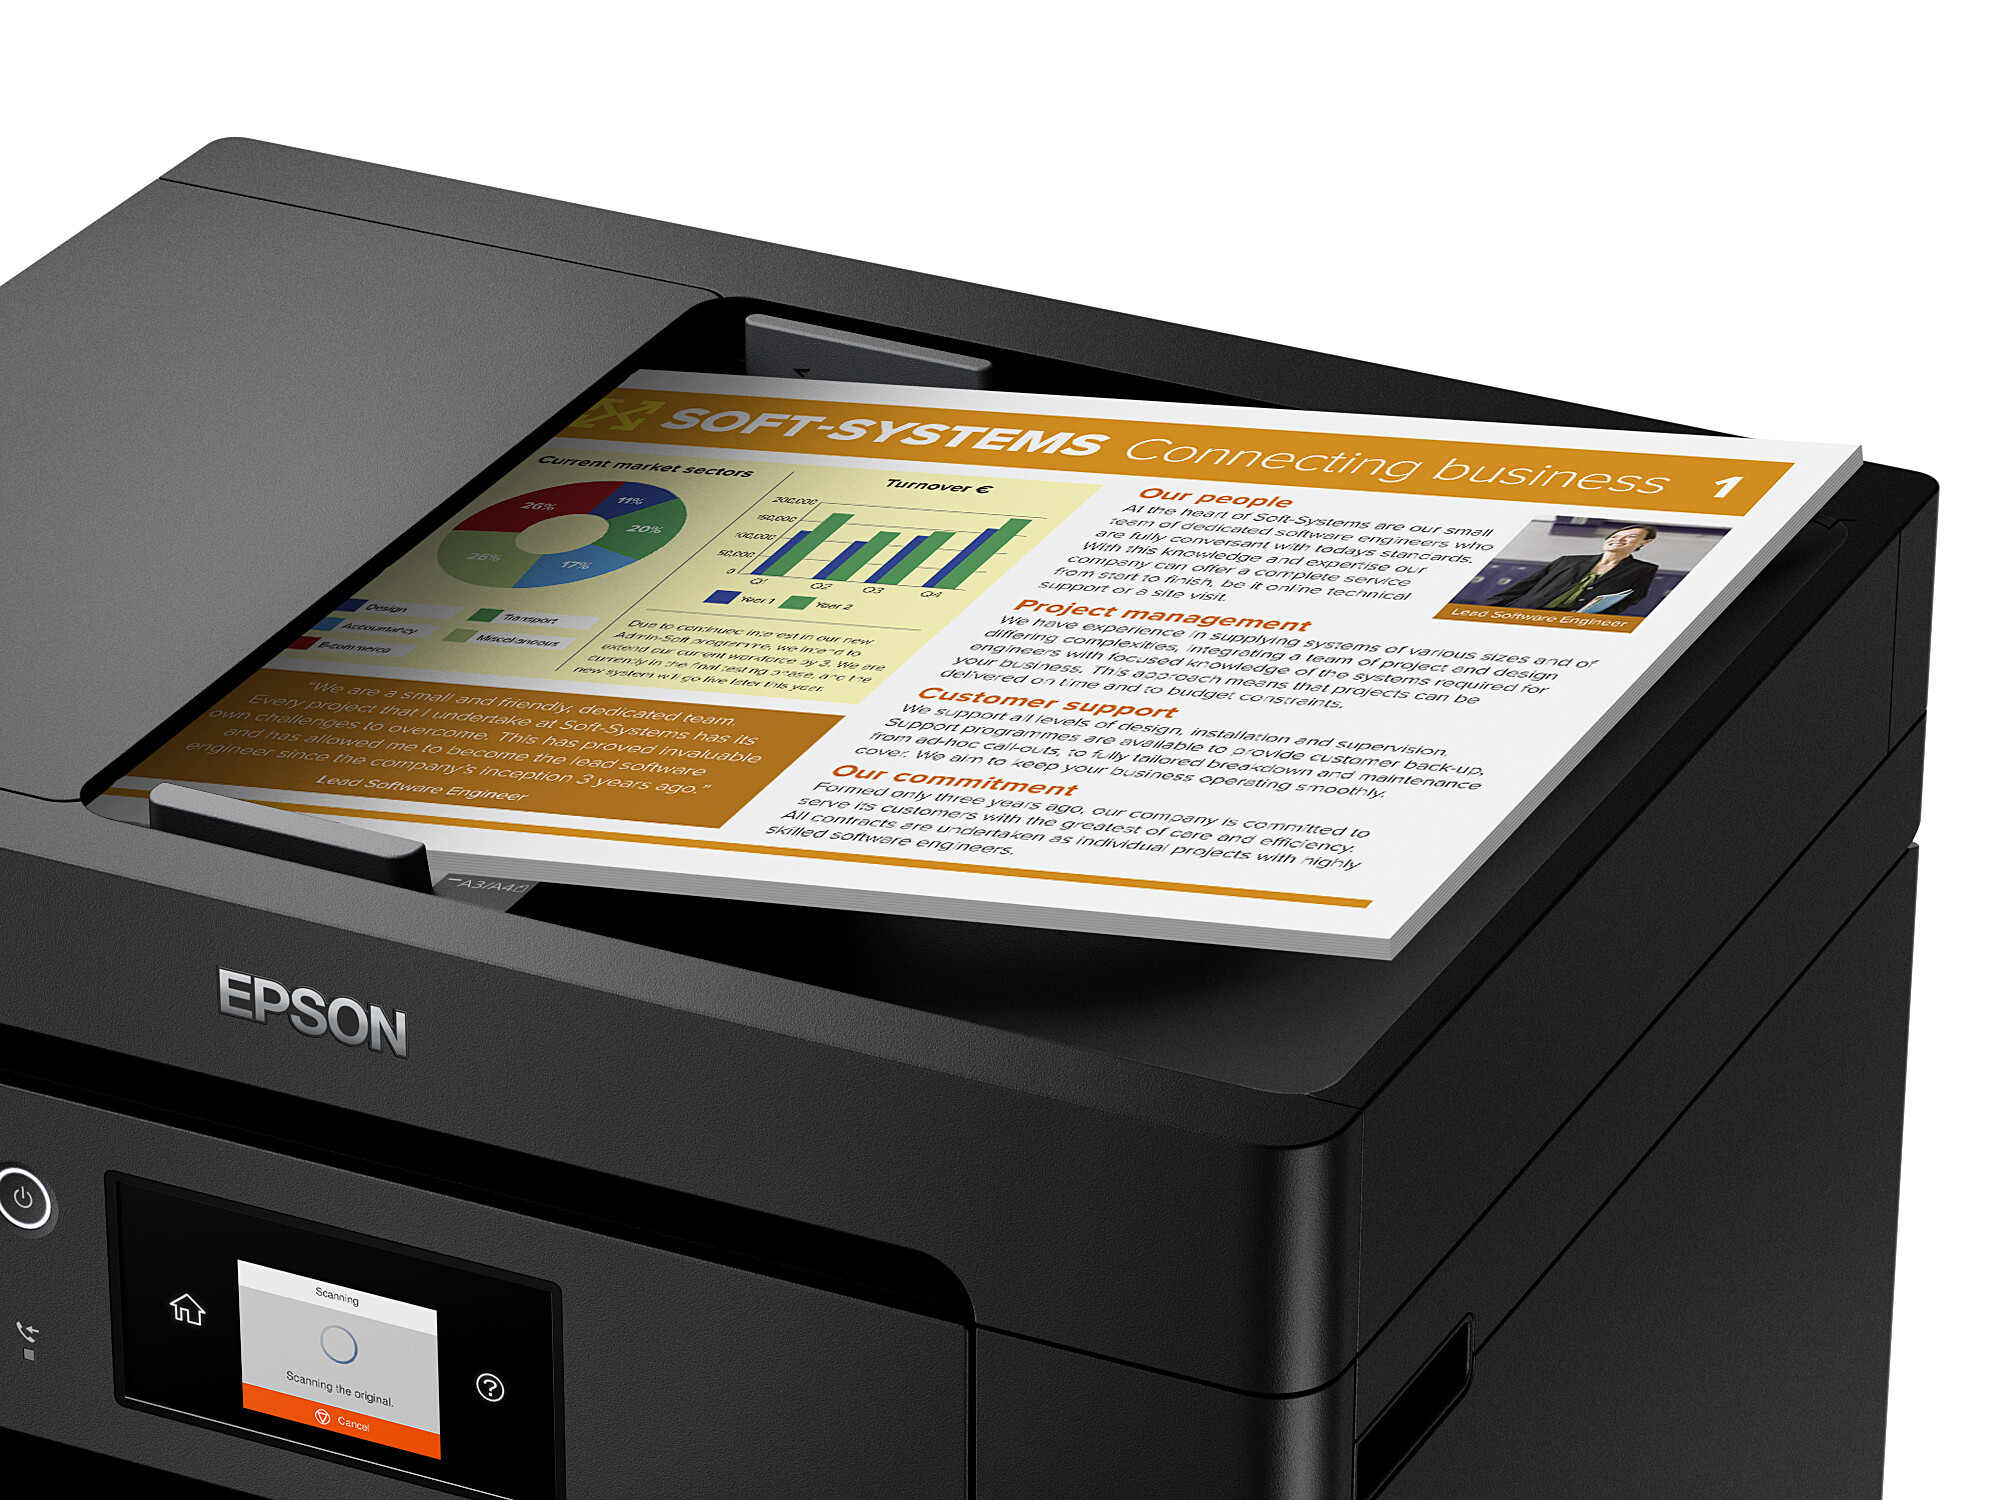 Epson-WorkForce-WF-7830DTWF-Printer